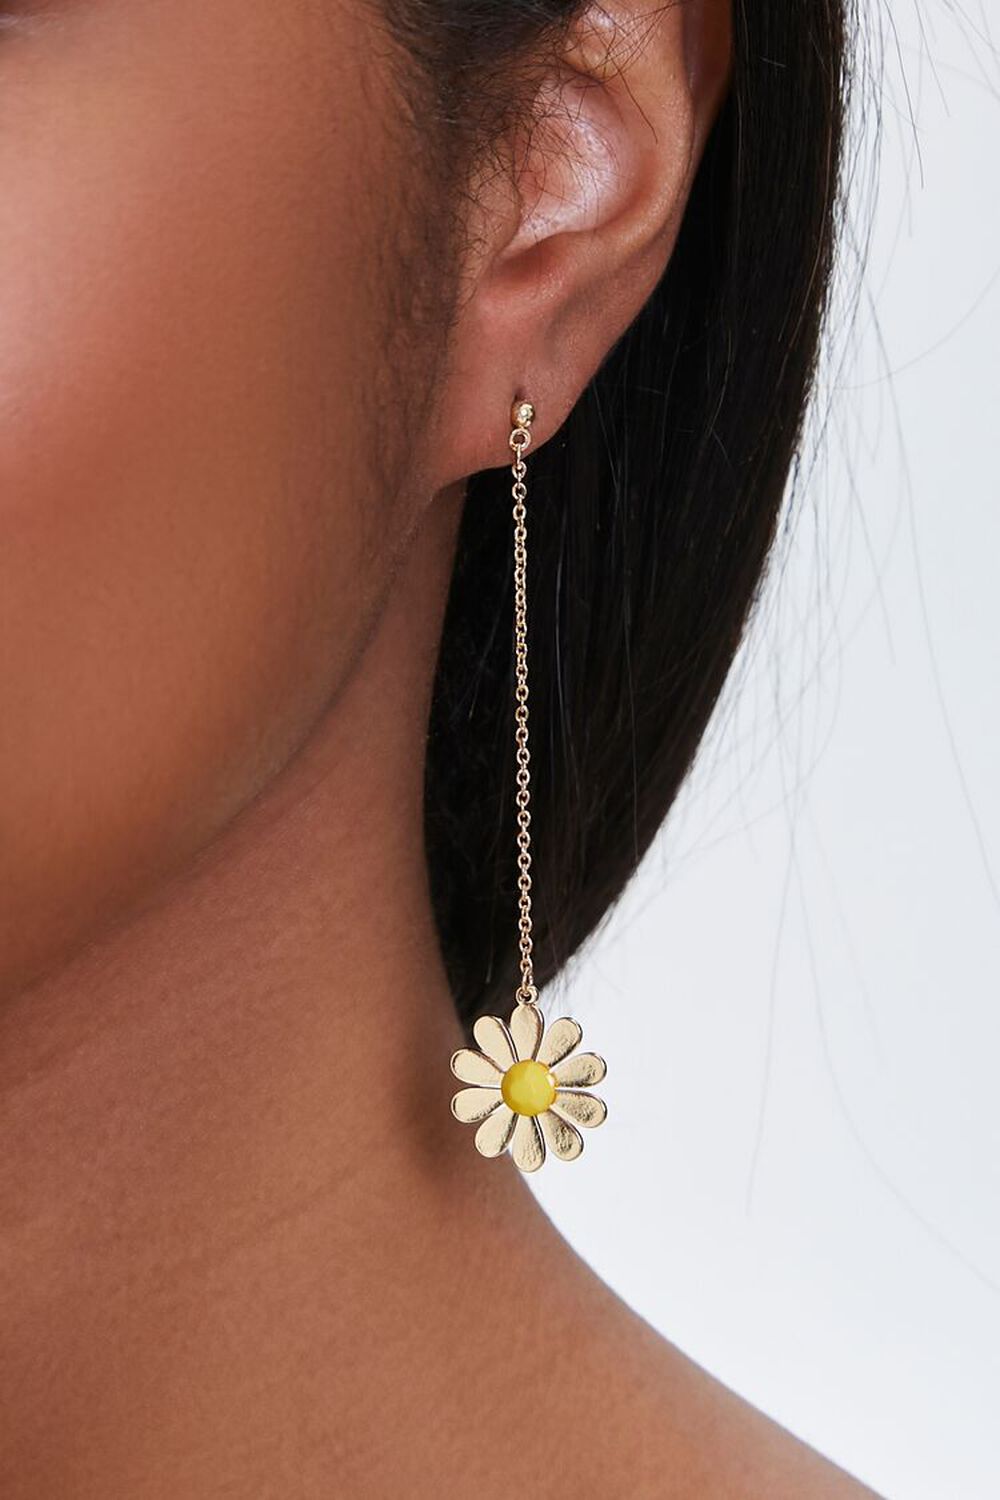 GOLD Daisy Pendant Drop Earrings, image 1